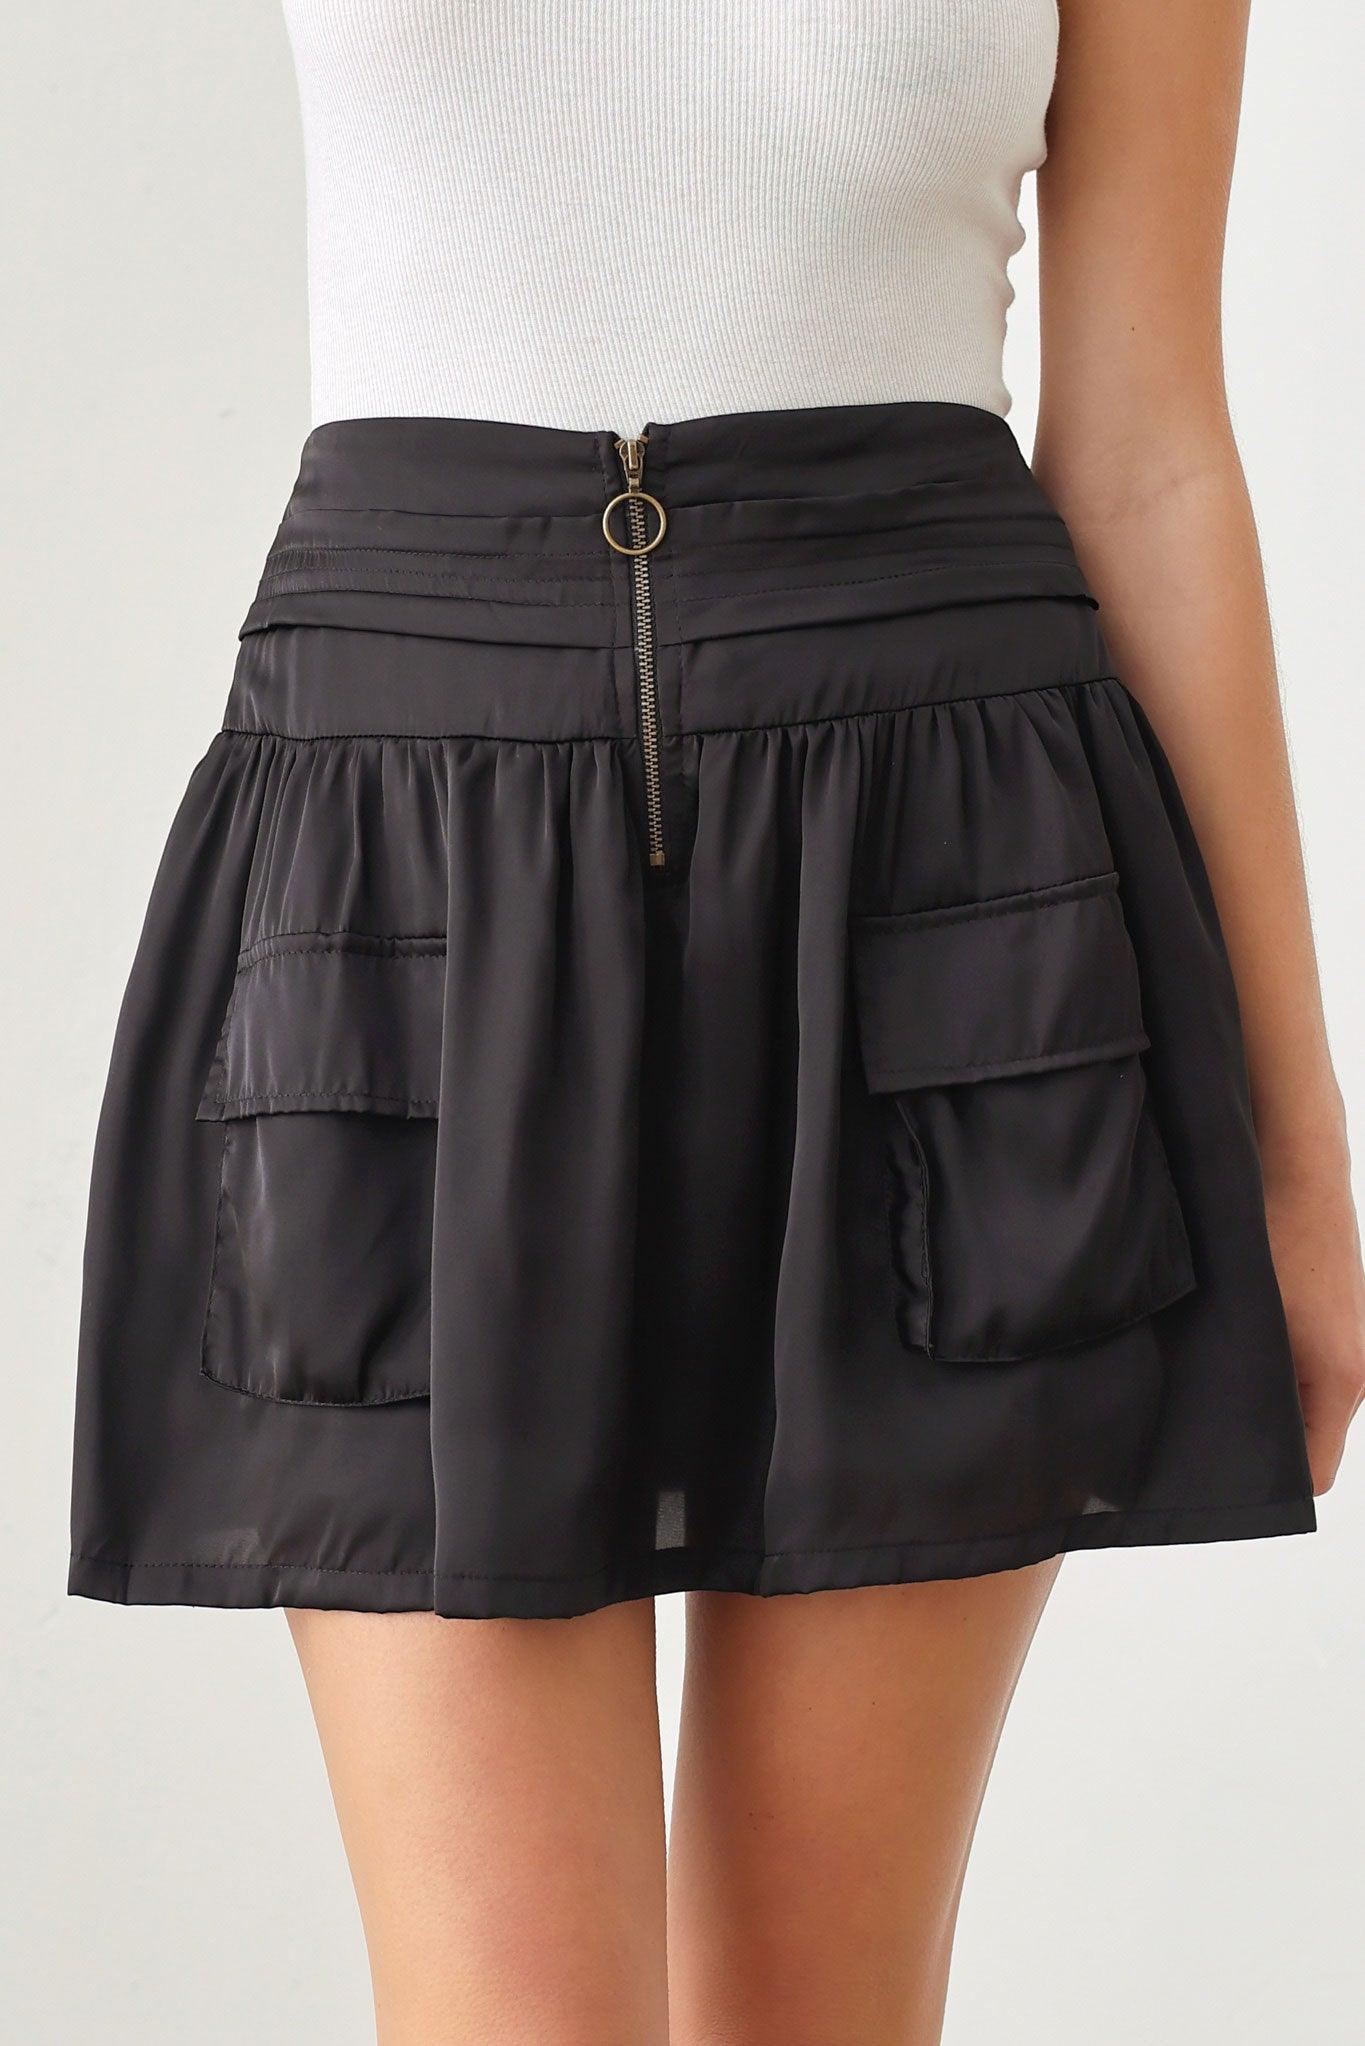 Front Out Pocket Zip Up Smocked Back Mini Skirt - Tasha Apparel Wholesale